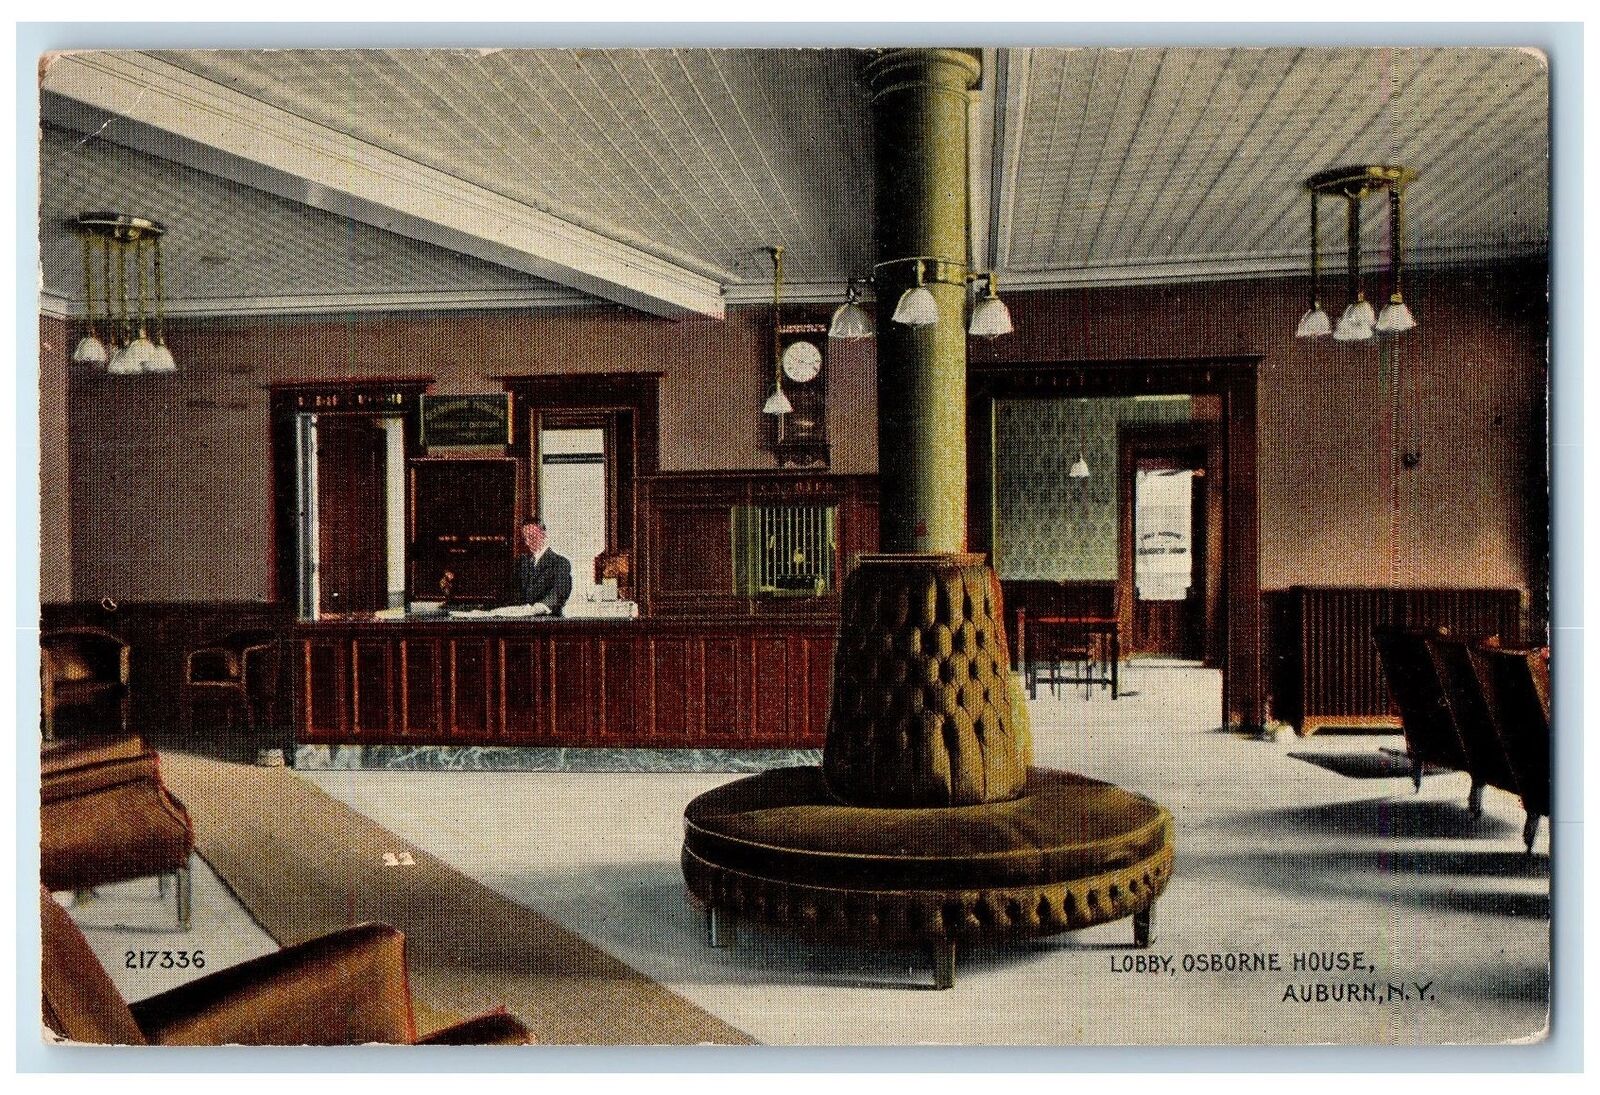 1922 Interior Lobby Osborne House Auburn New York NY Hotel Restaurant Postcard